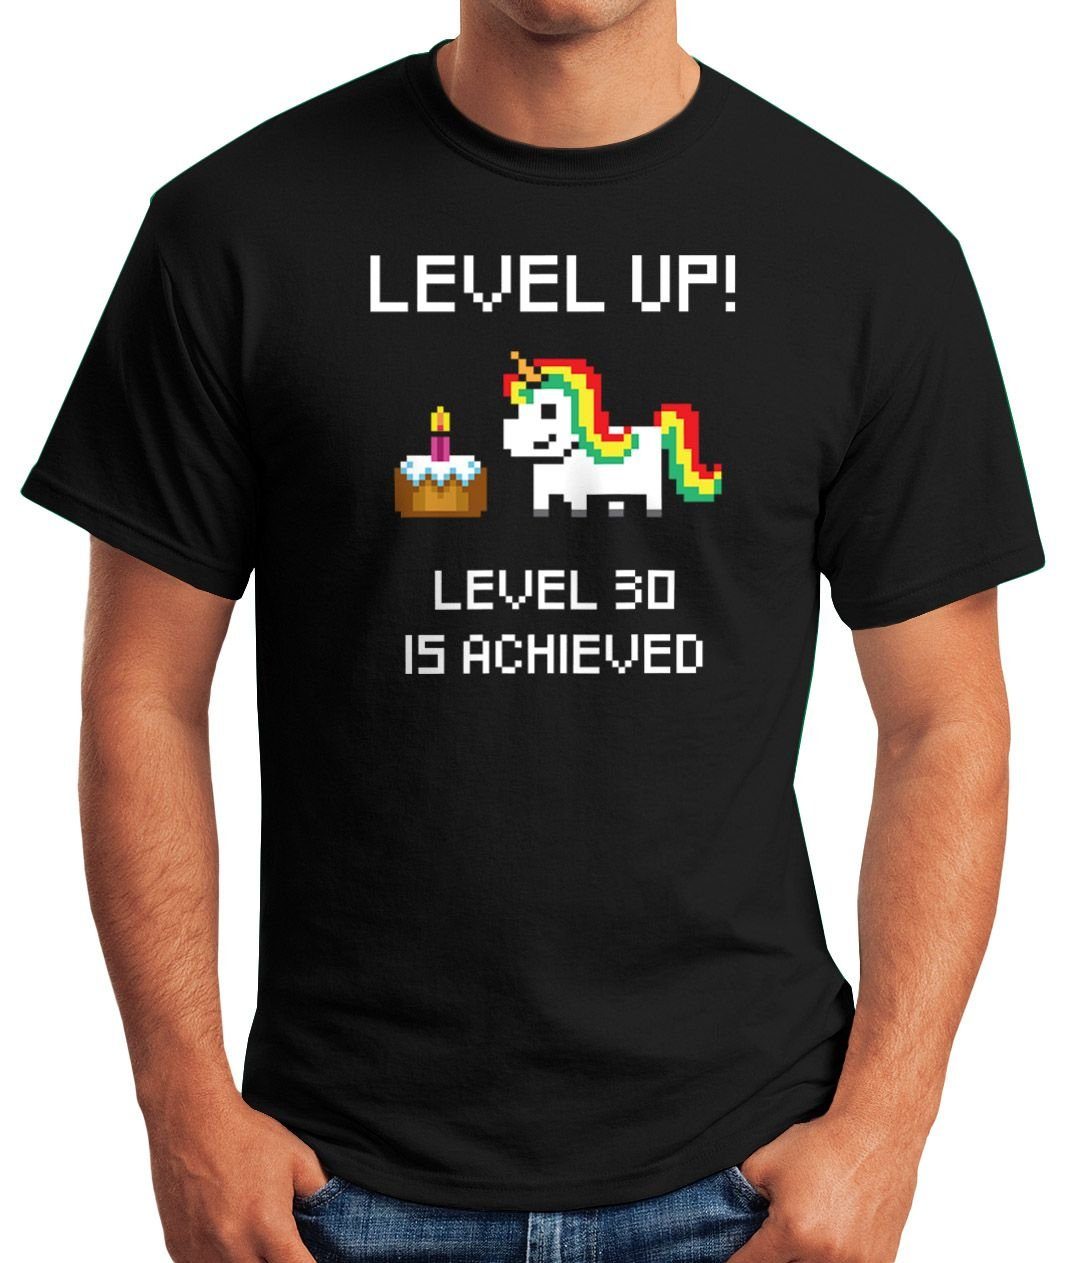 Retro Arcade Print Geschenk Print-Shirt Herren Moonworks® schwarz Pixel-Einhorn T-Shirt 30 Geburtstag Level Gamer Fun-Shirt Pixelgrafik Torte Up mit MoonWorks